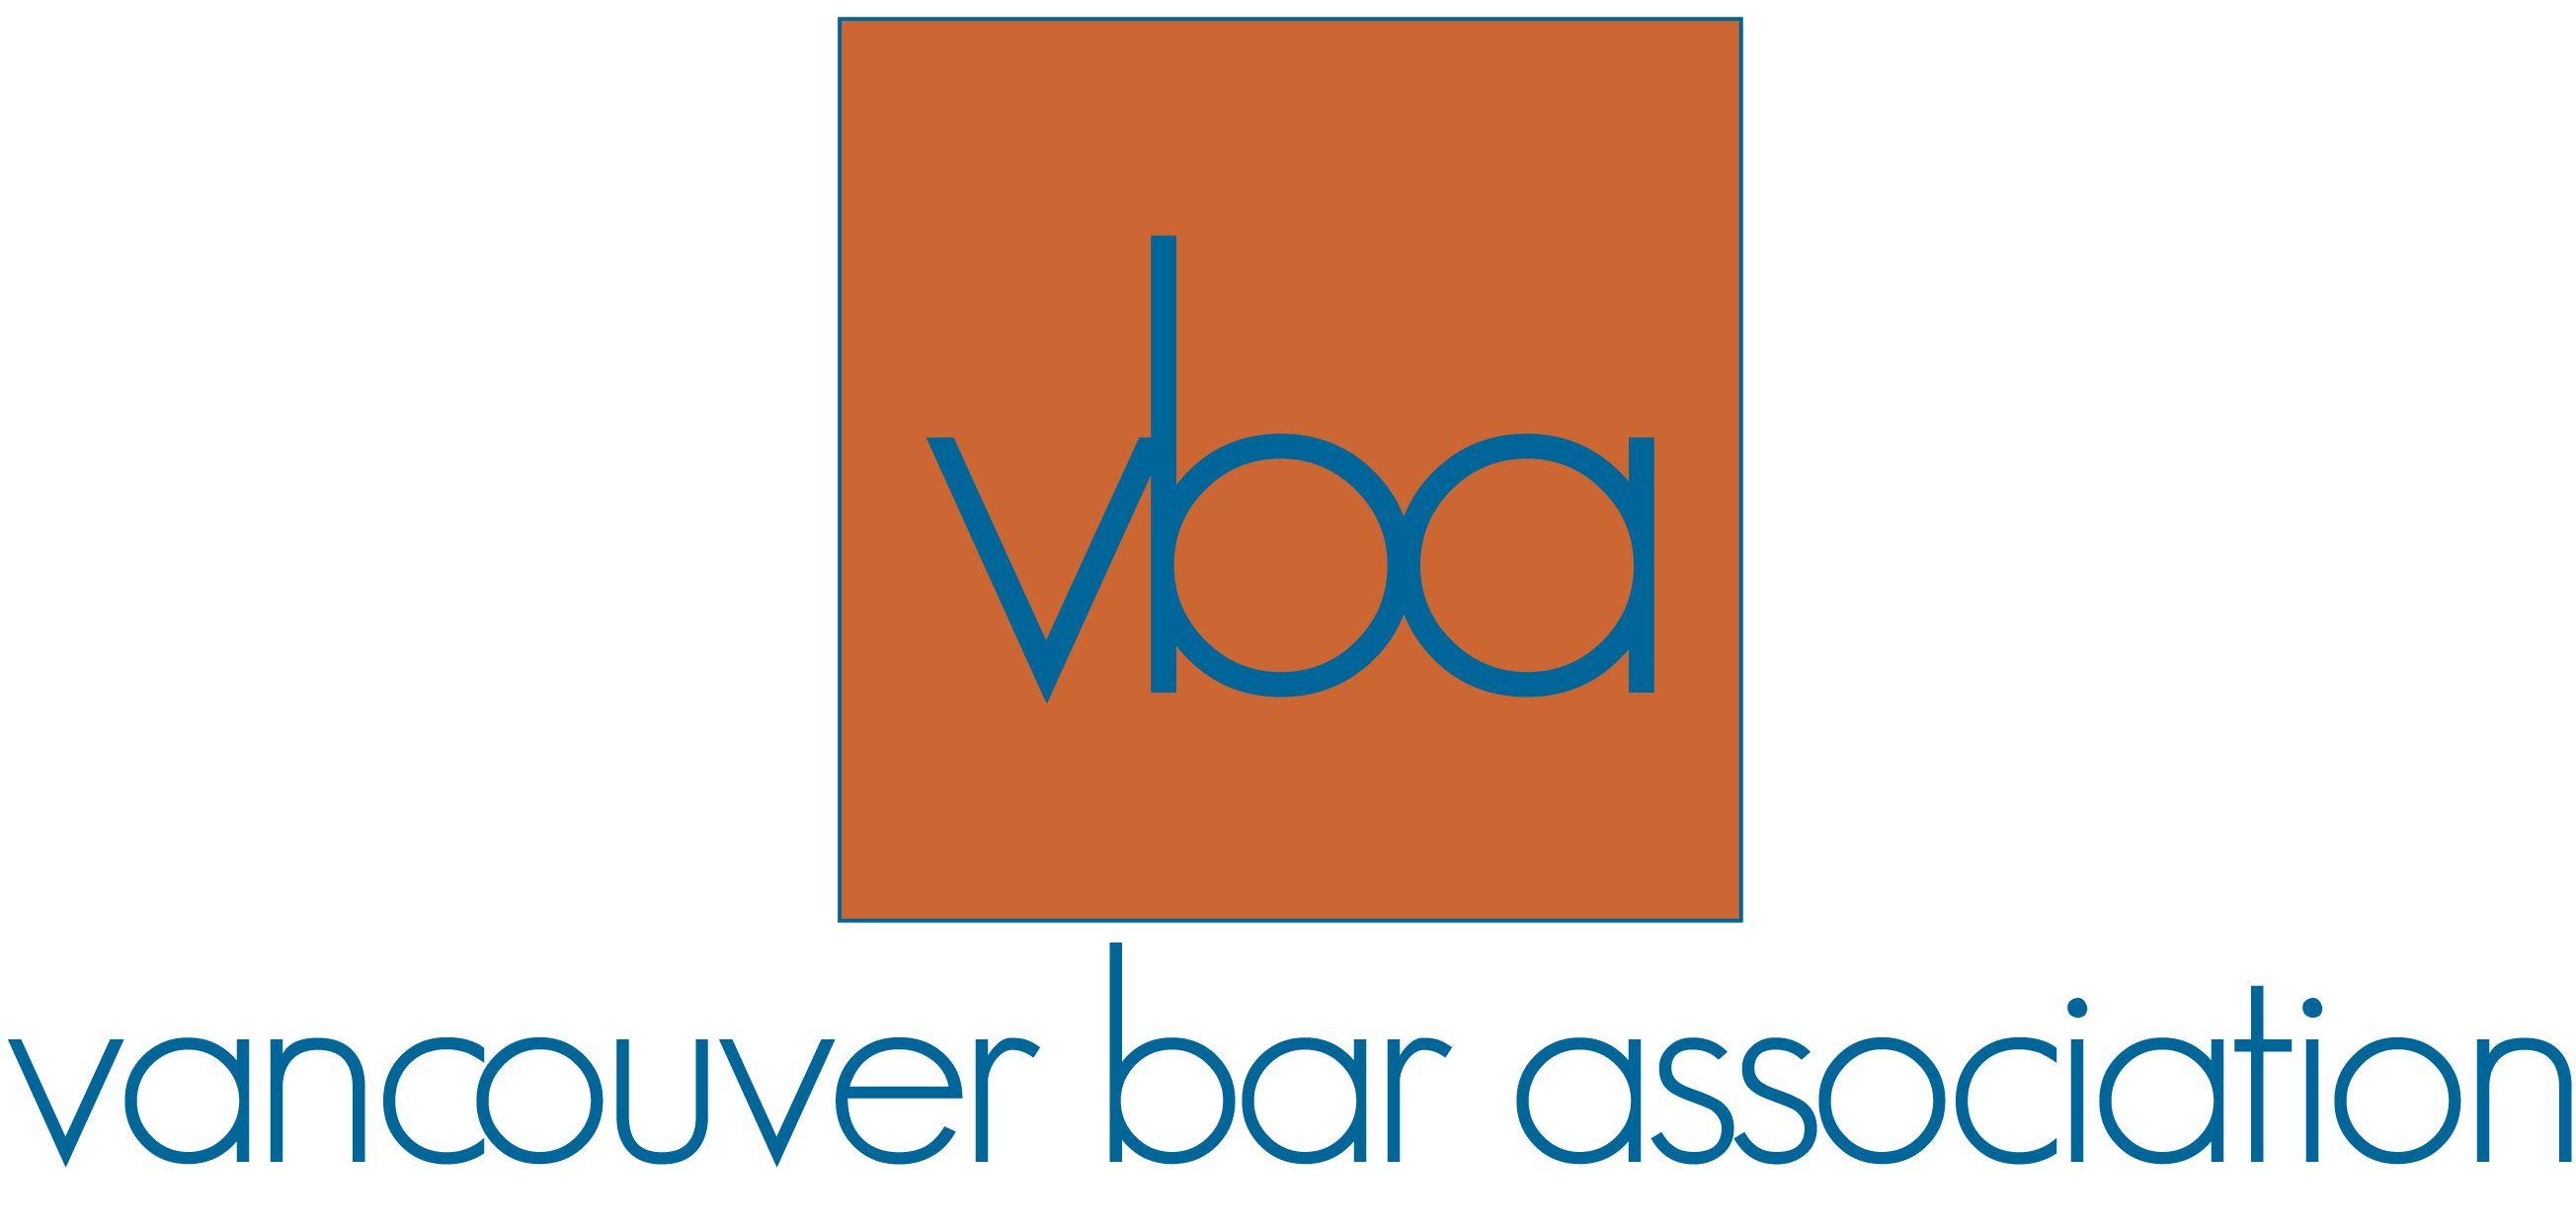 VBA Logo - Vba Logo Carousel Theatre For Young People